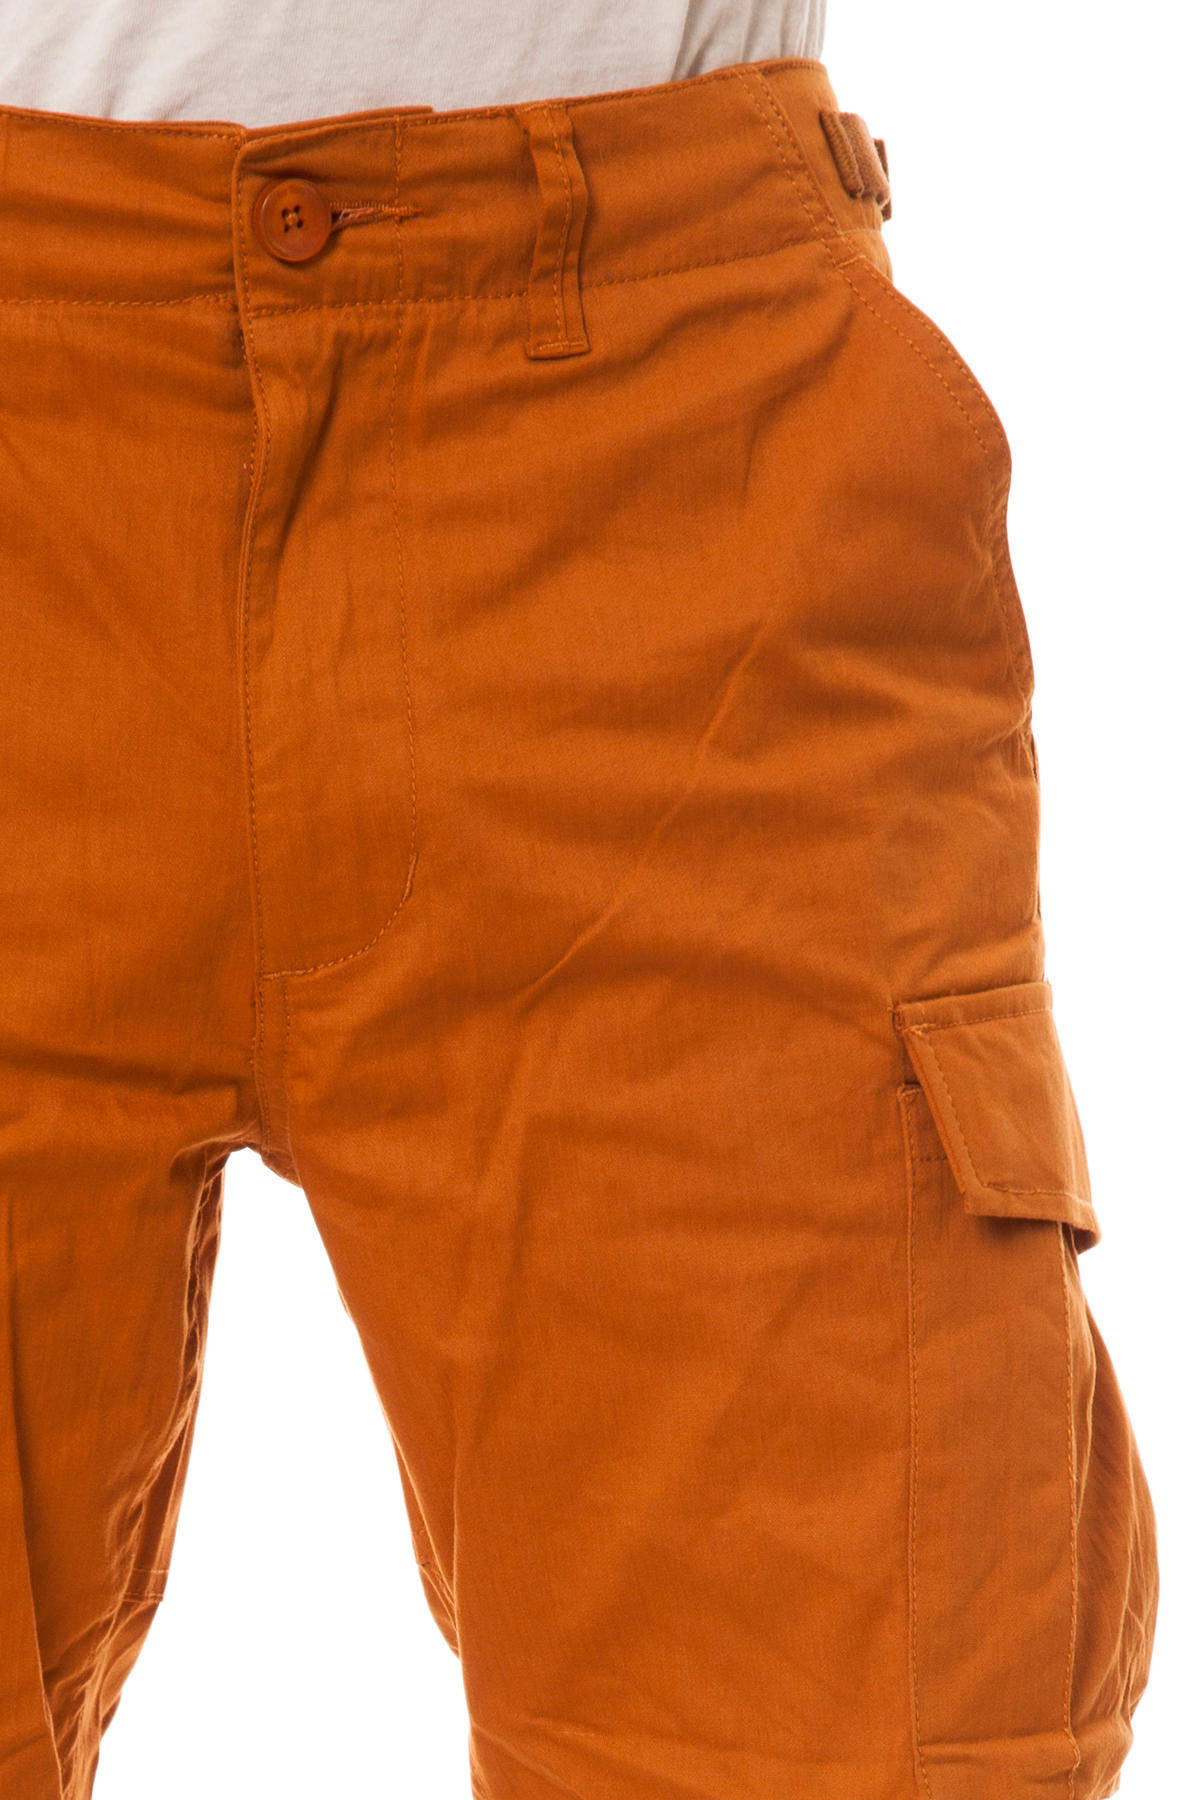 Lyst - Timberland The Avenir Cargo Pants in Orange for Men